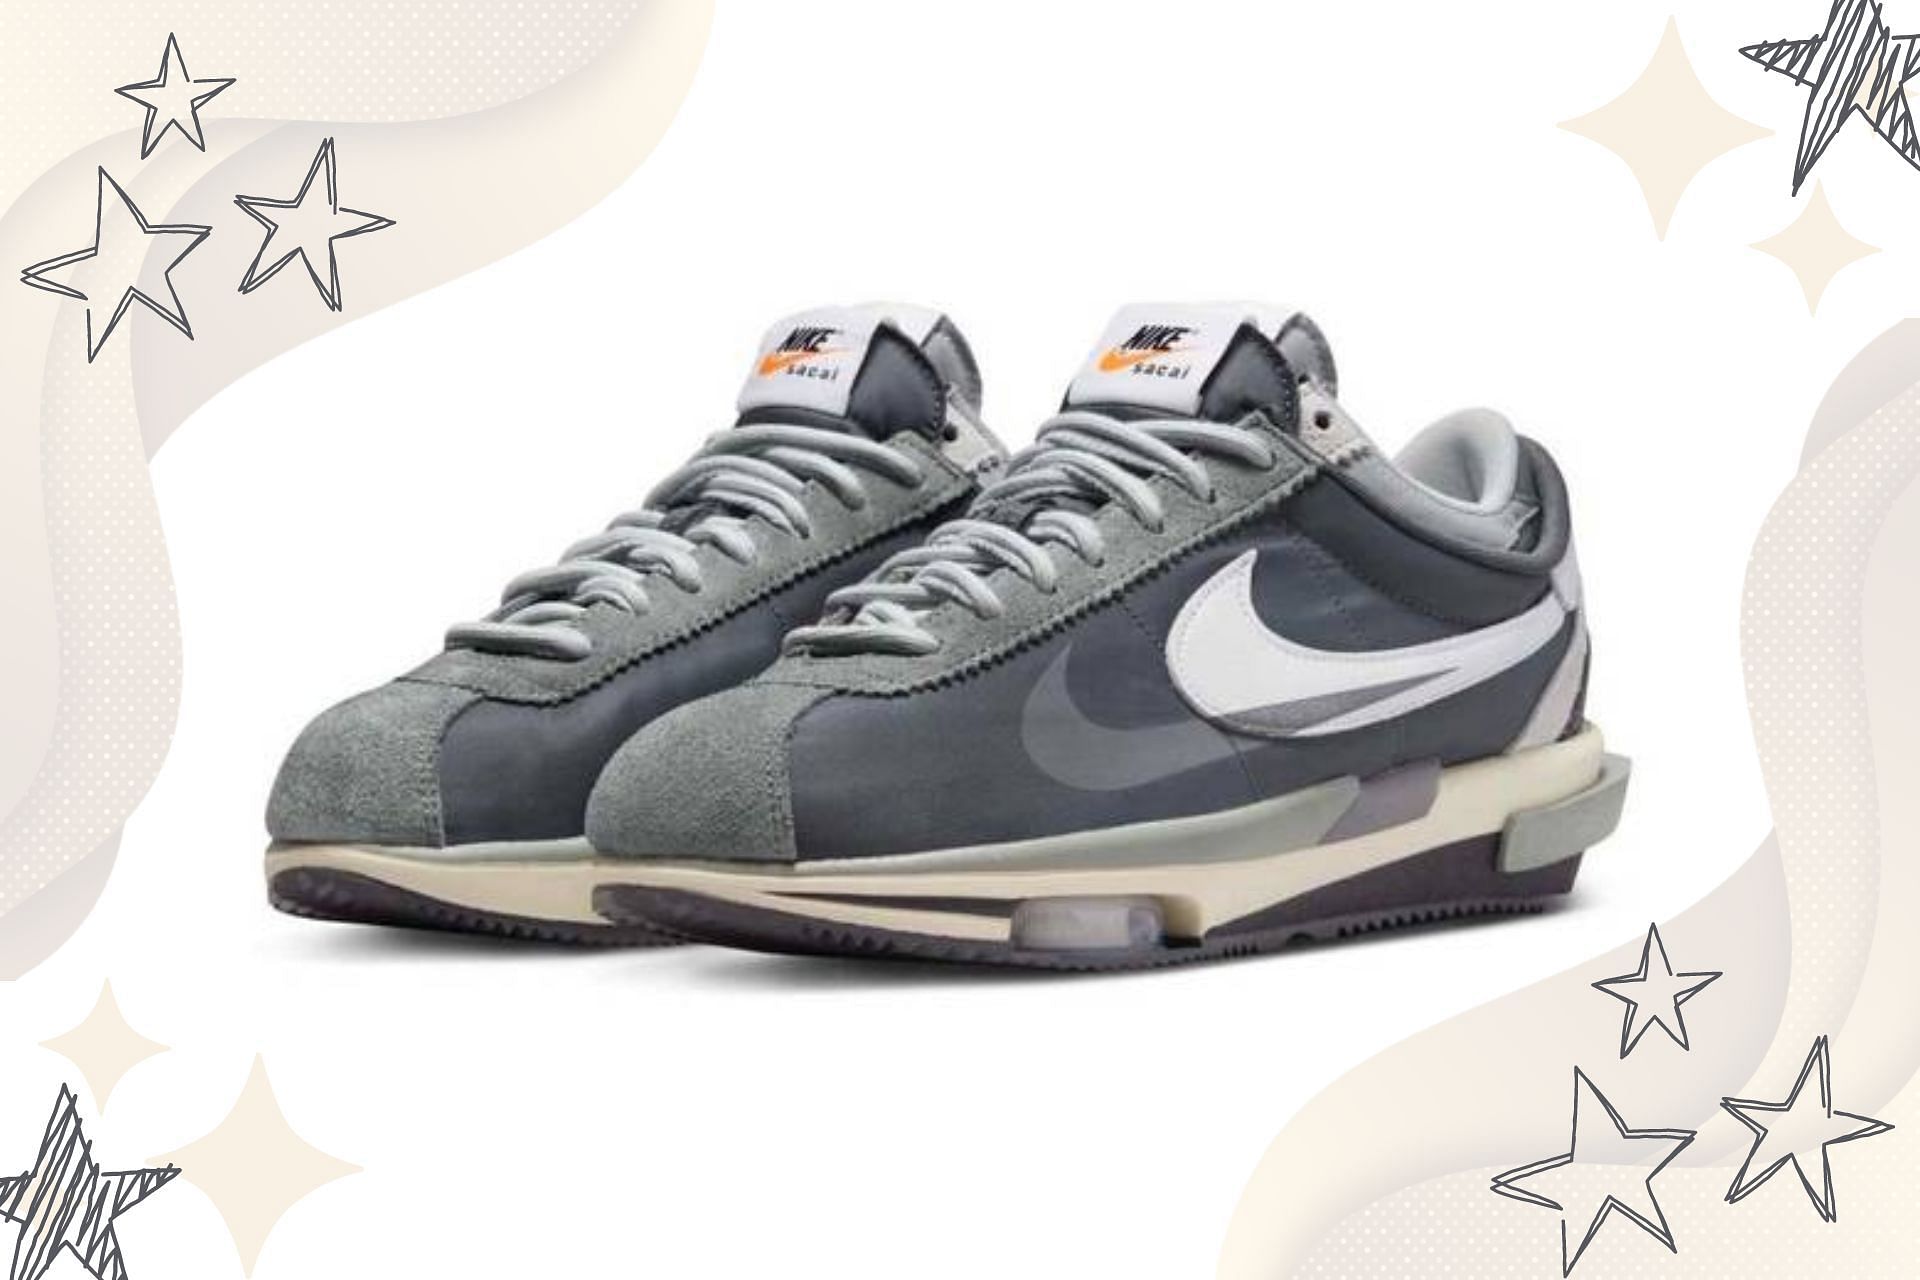 Sacai: When will be Sacai x Nike Cortez Zoom “Iron Grey” shoes be